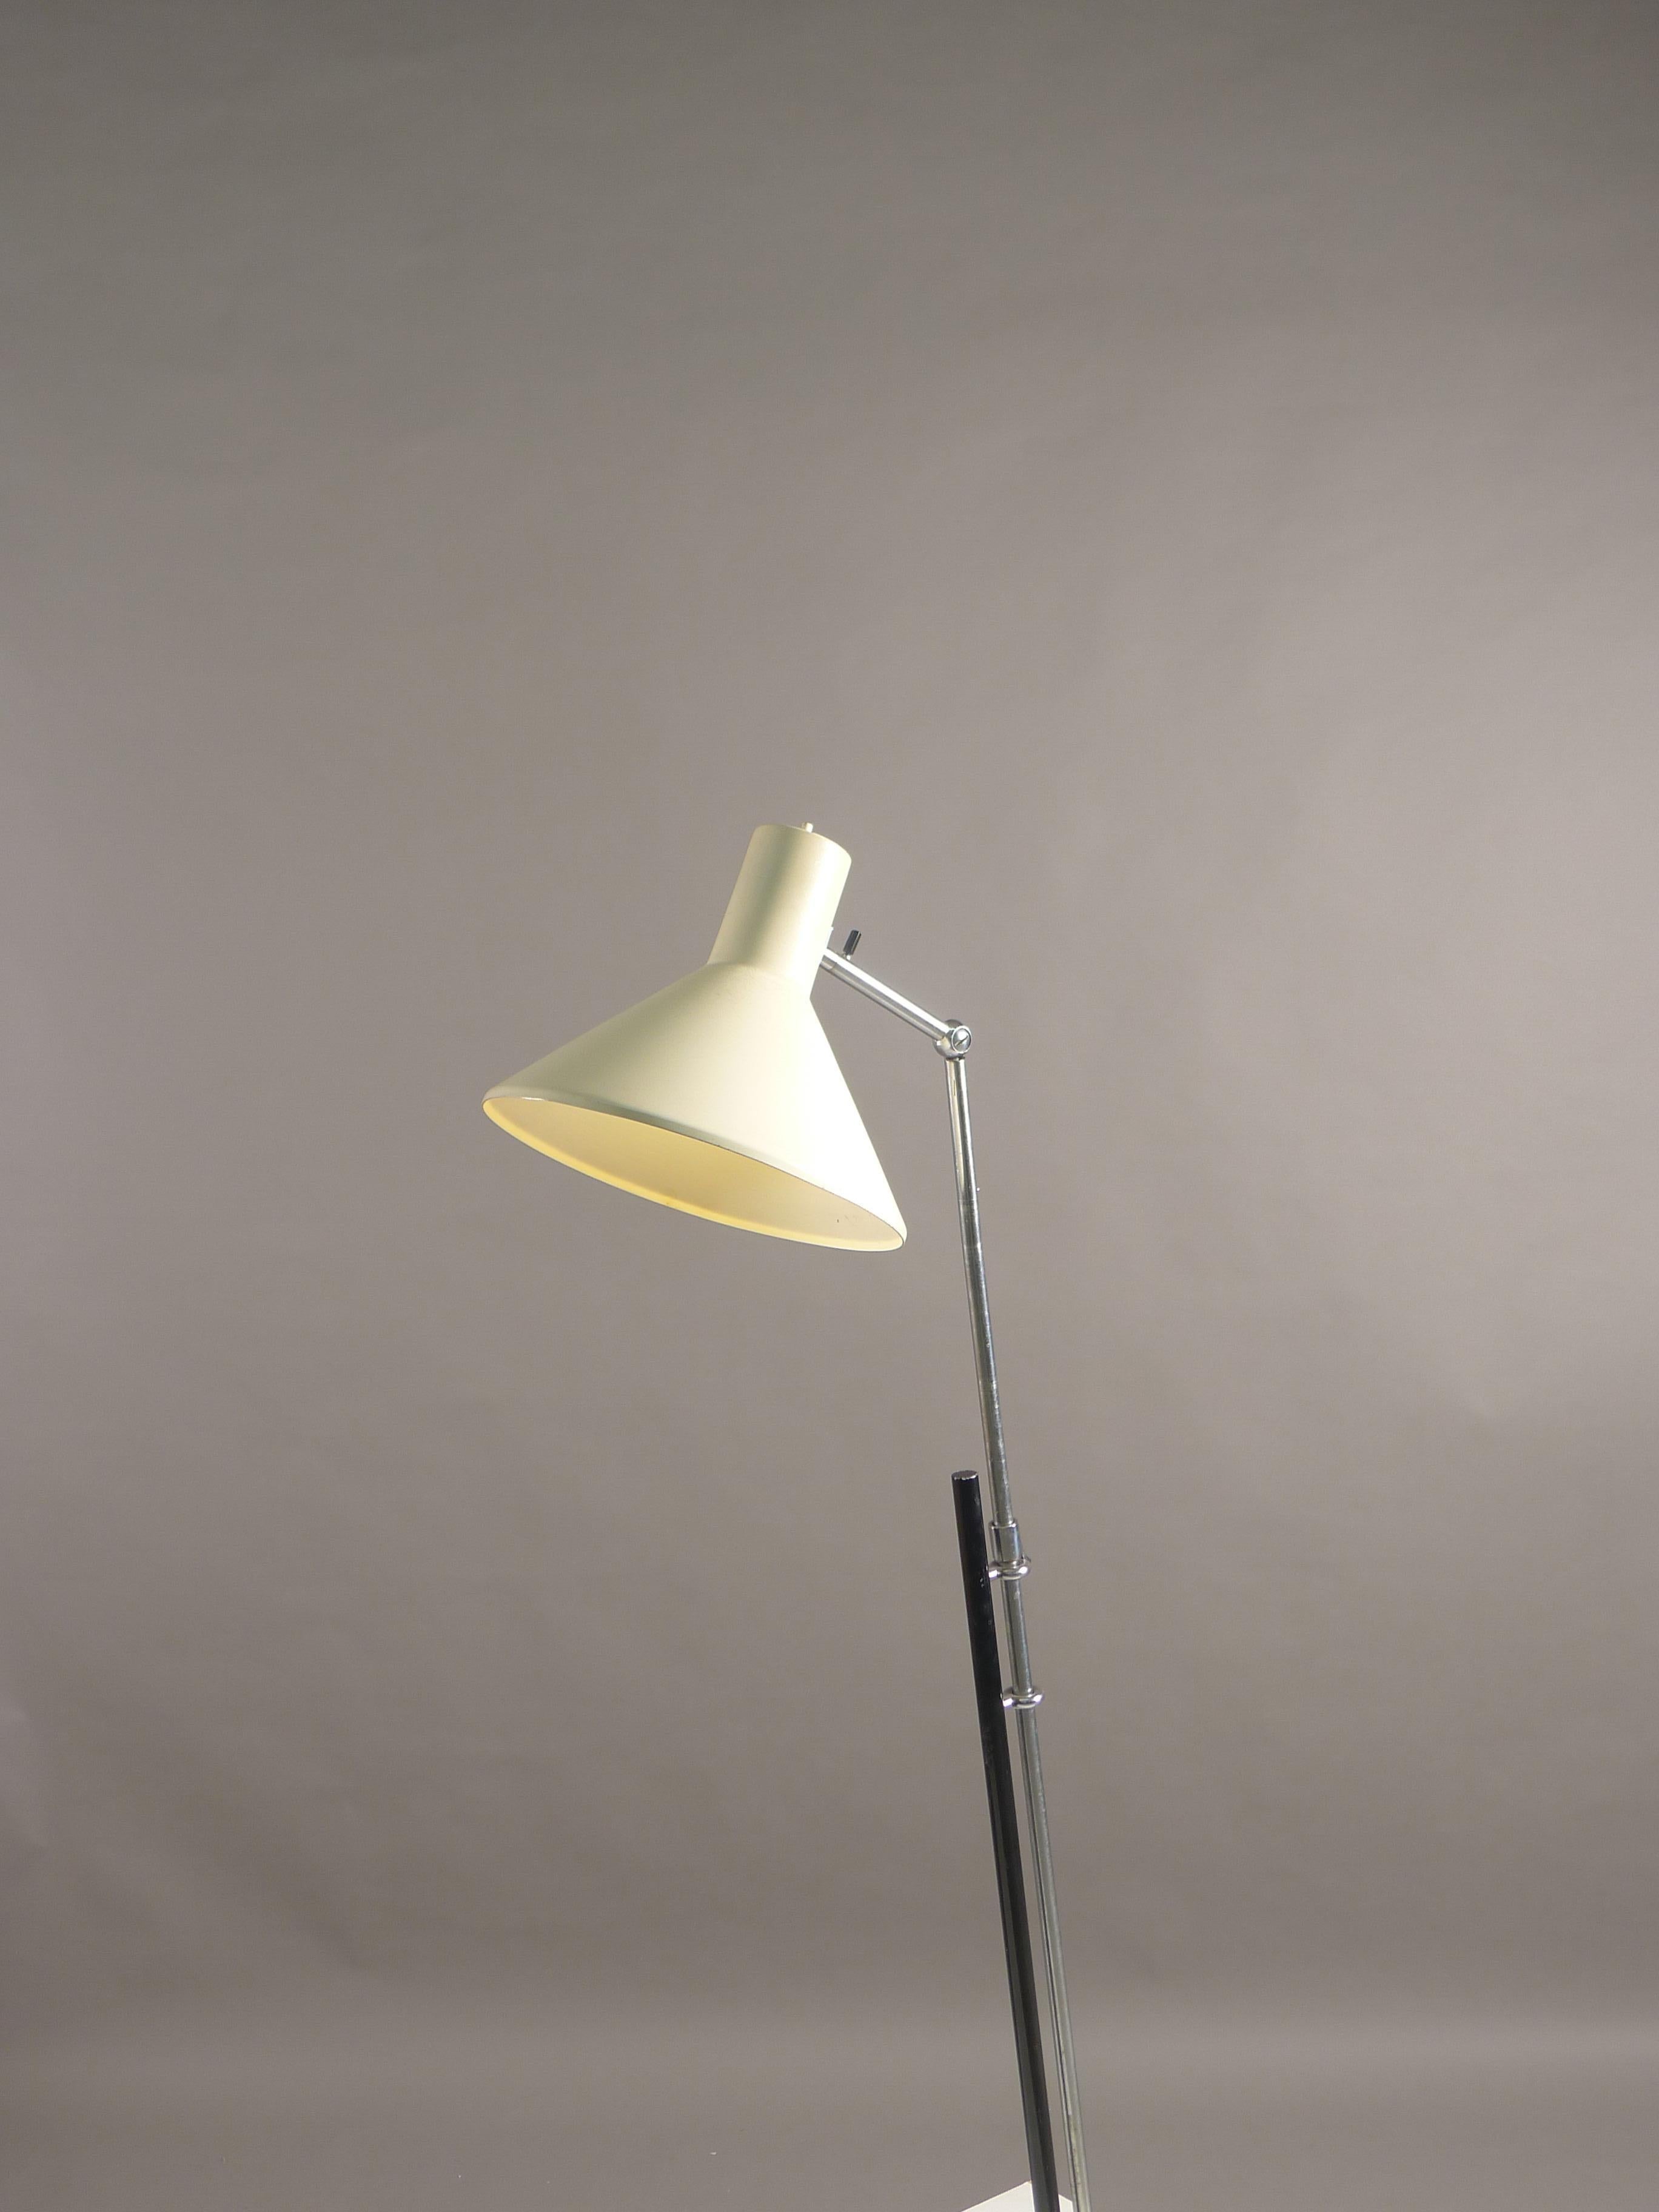 Mid-Century Modern Gino Sarfatti for Arteluce , Italy , model 1045 Floor Lamp circa 1948 .   For Sale